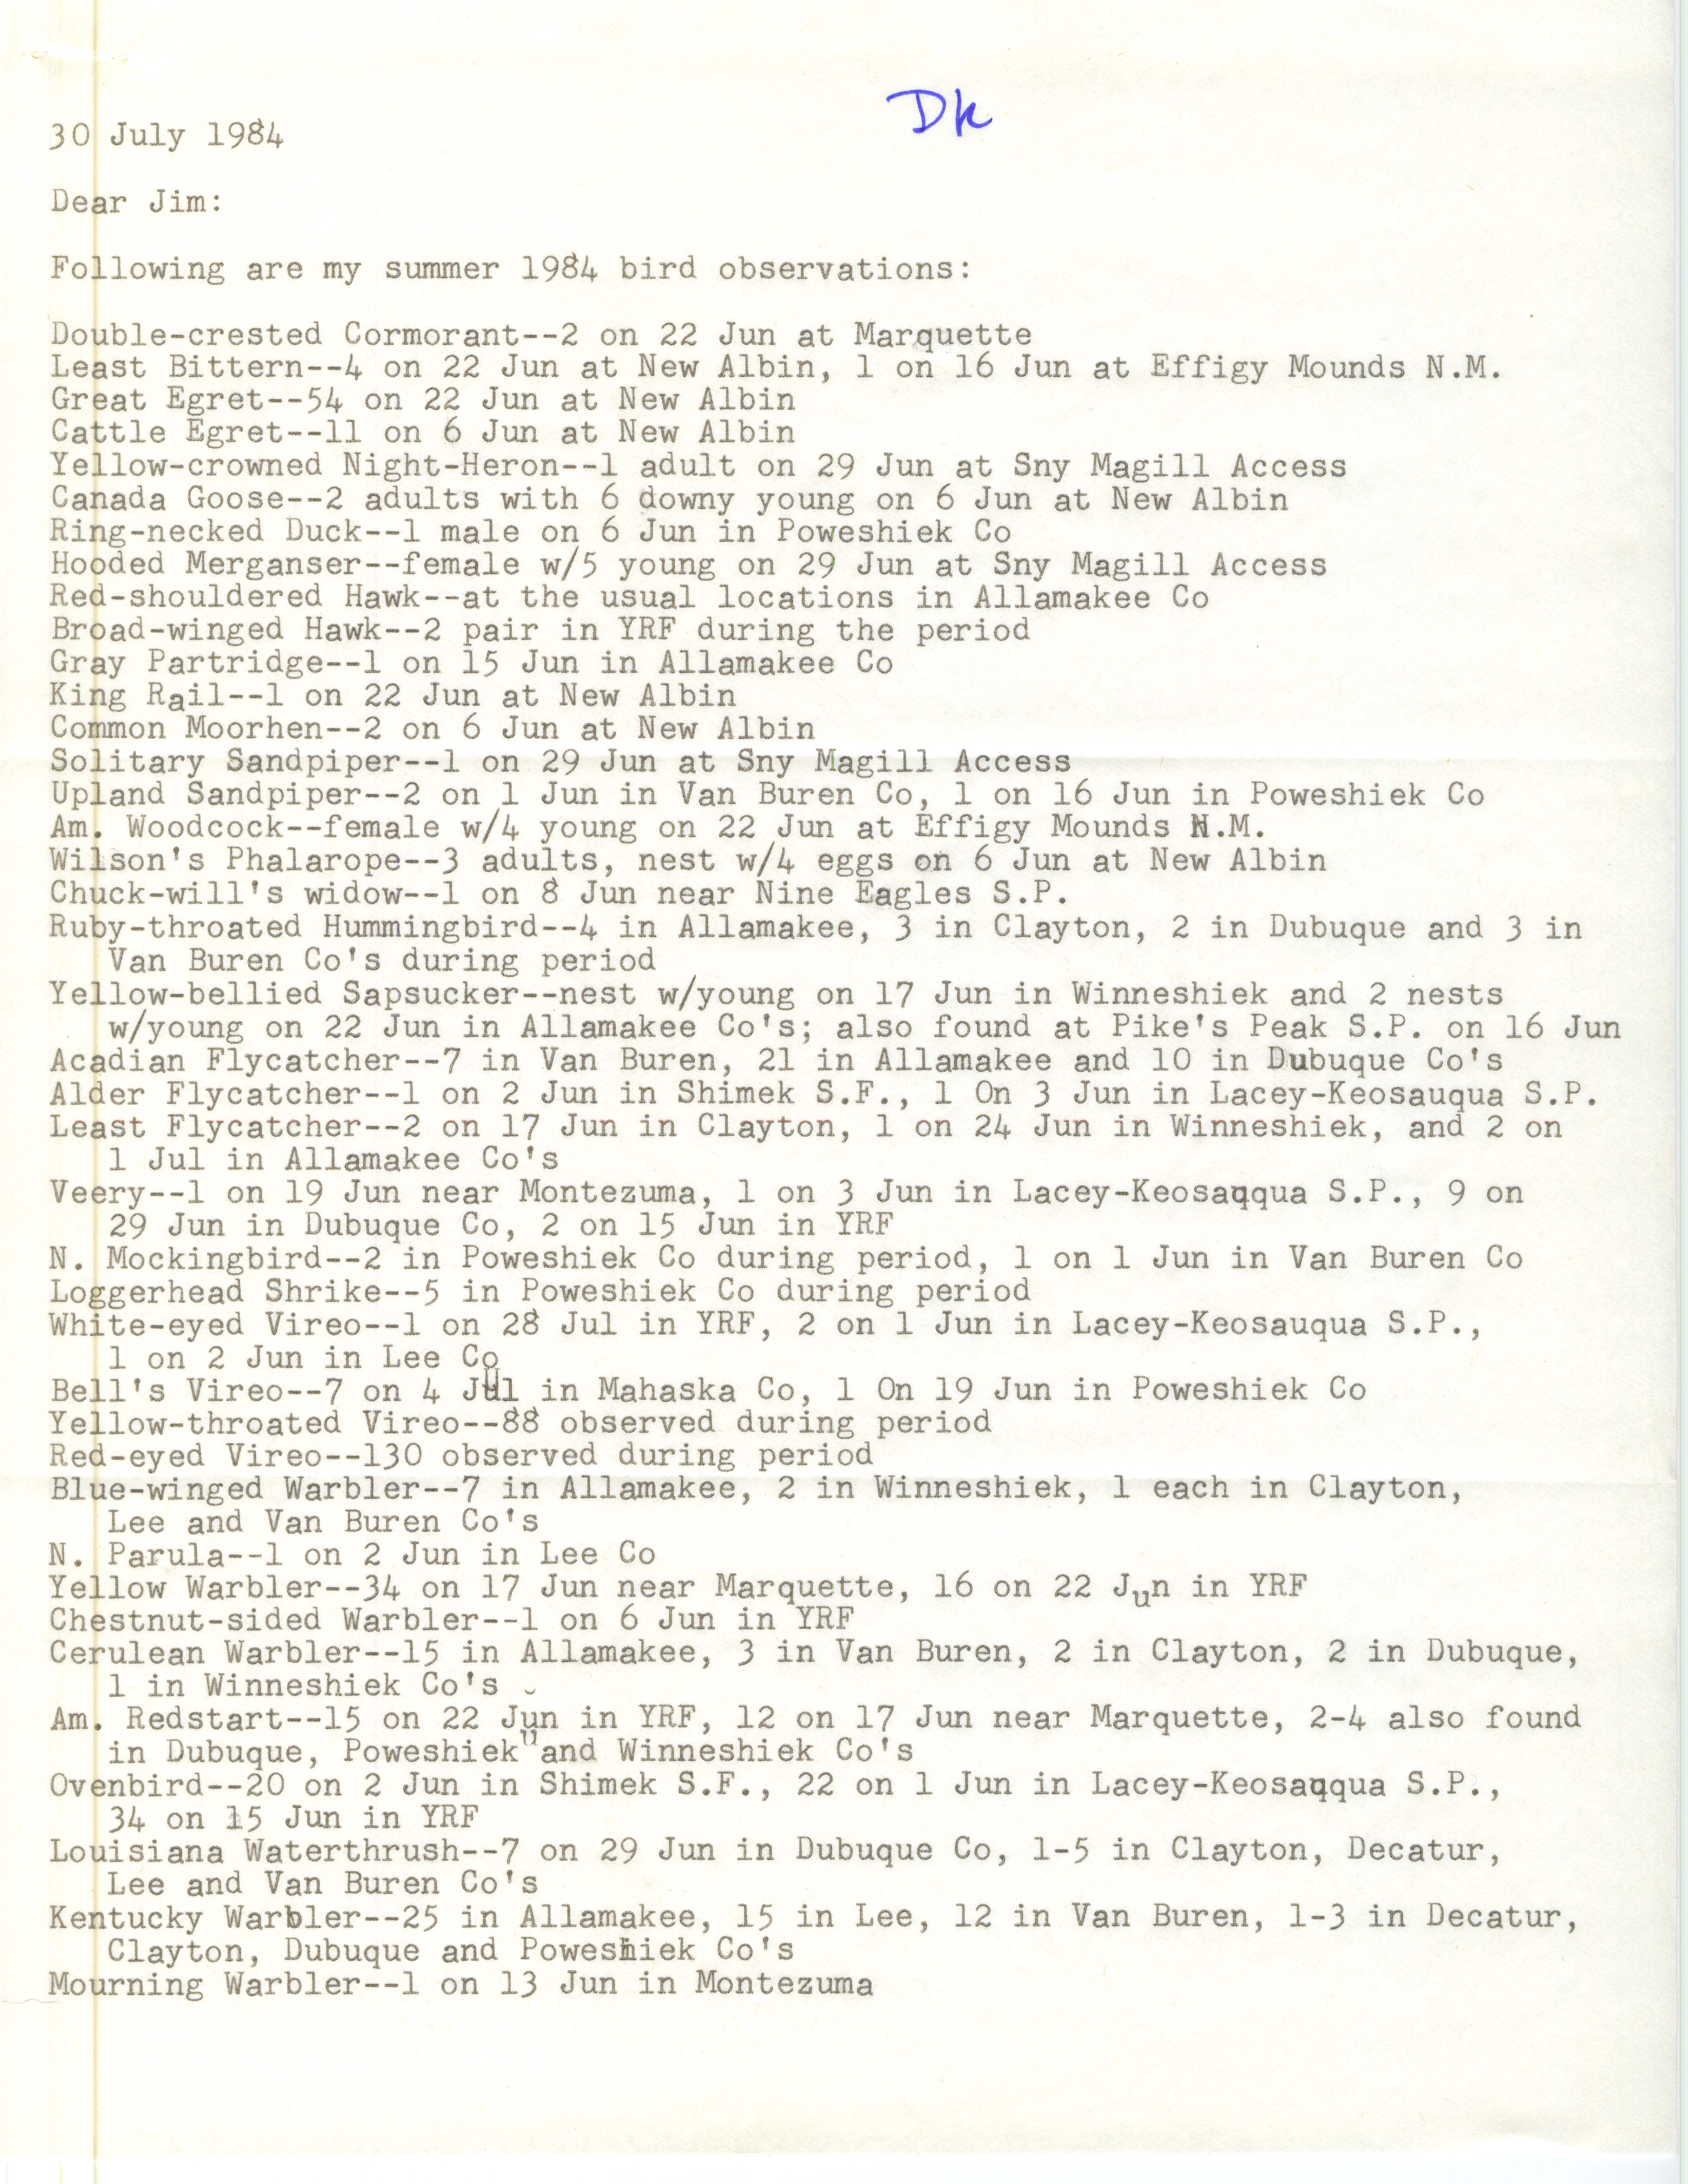 Darwin Koenig letter to James J. Dinsmore regarding birds sighted in summer 1984, July 30, 1984